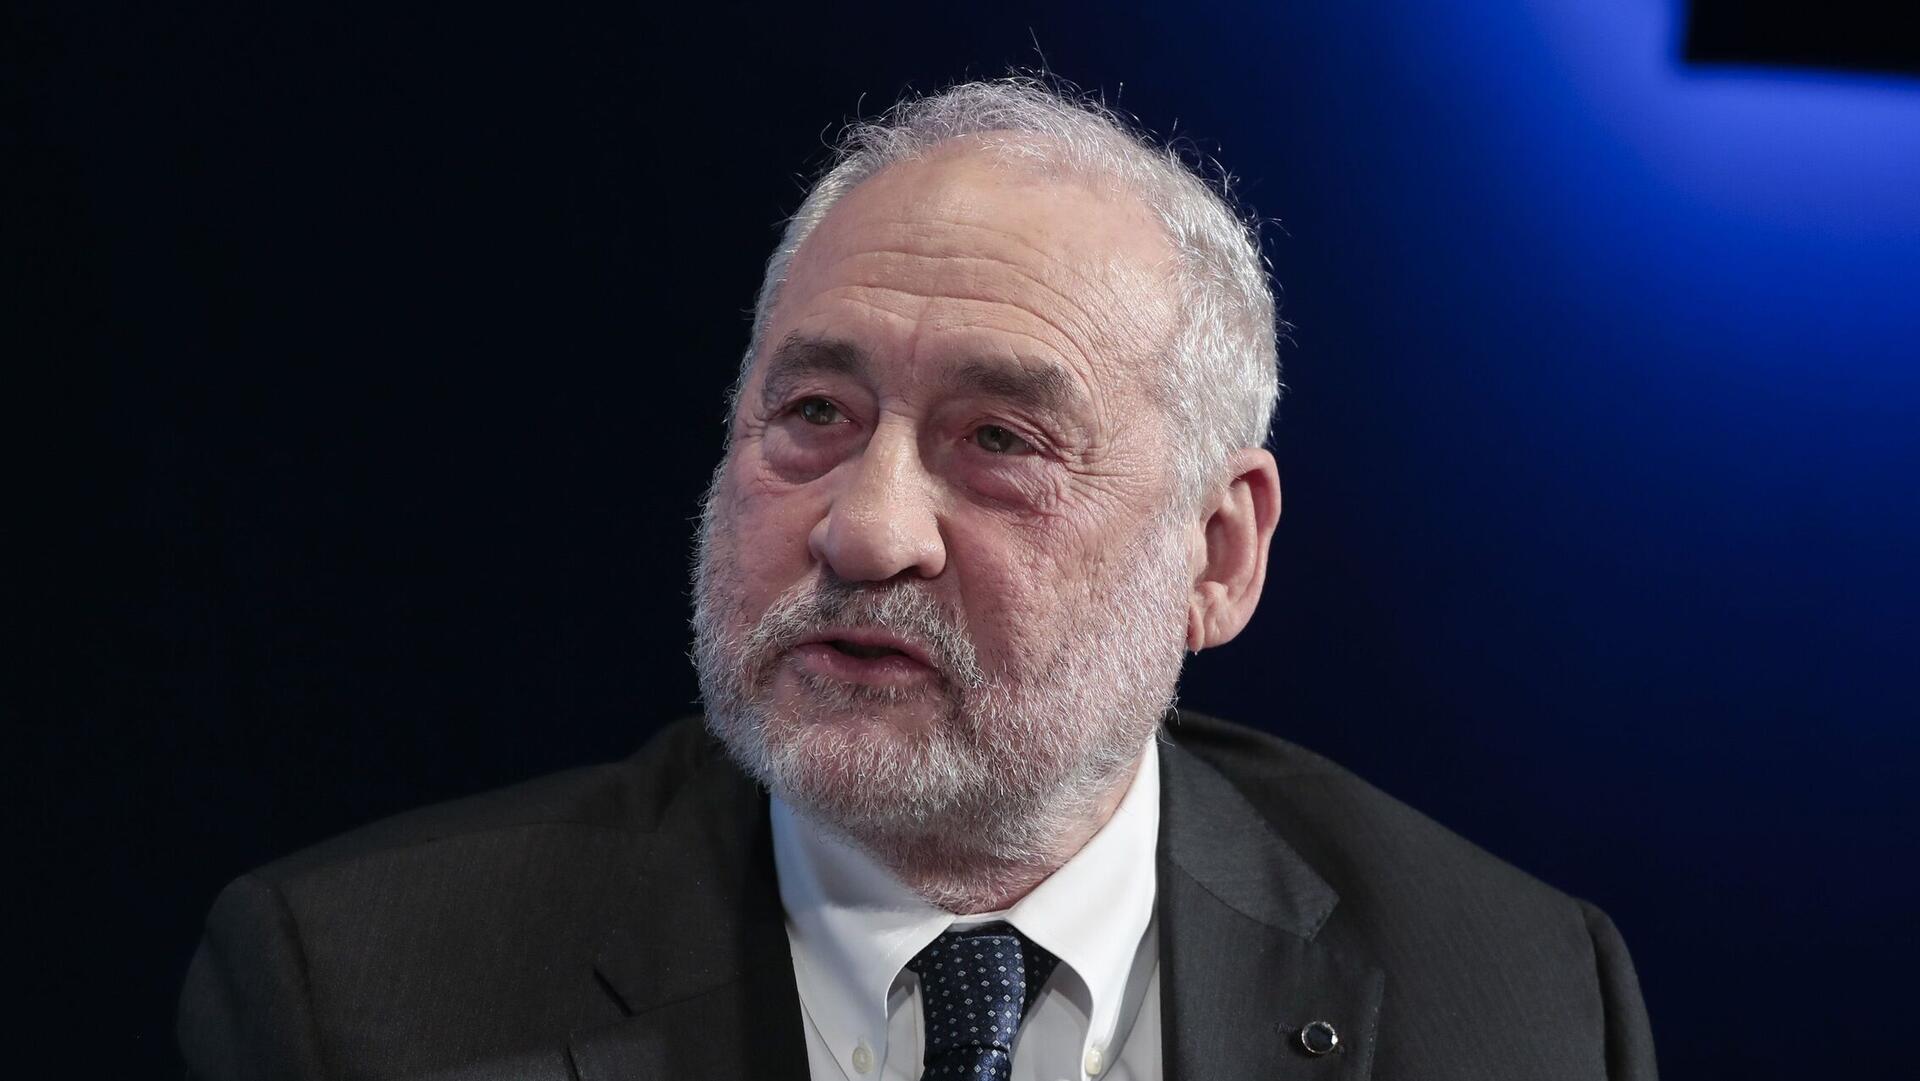 ג'וזף שטיגליץ חתן פרס נובל דאבוס 2018